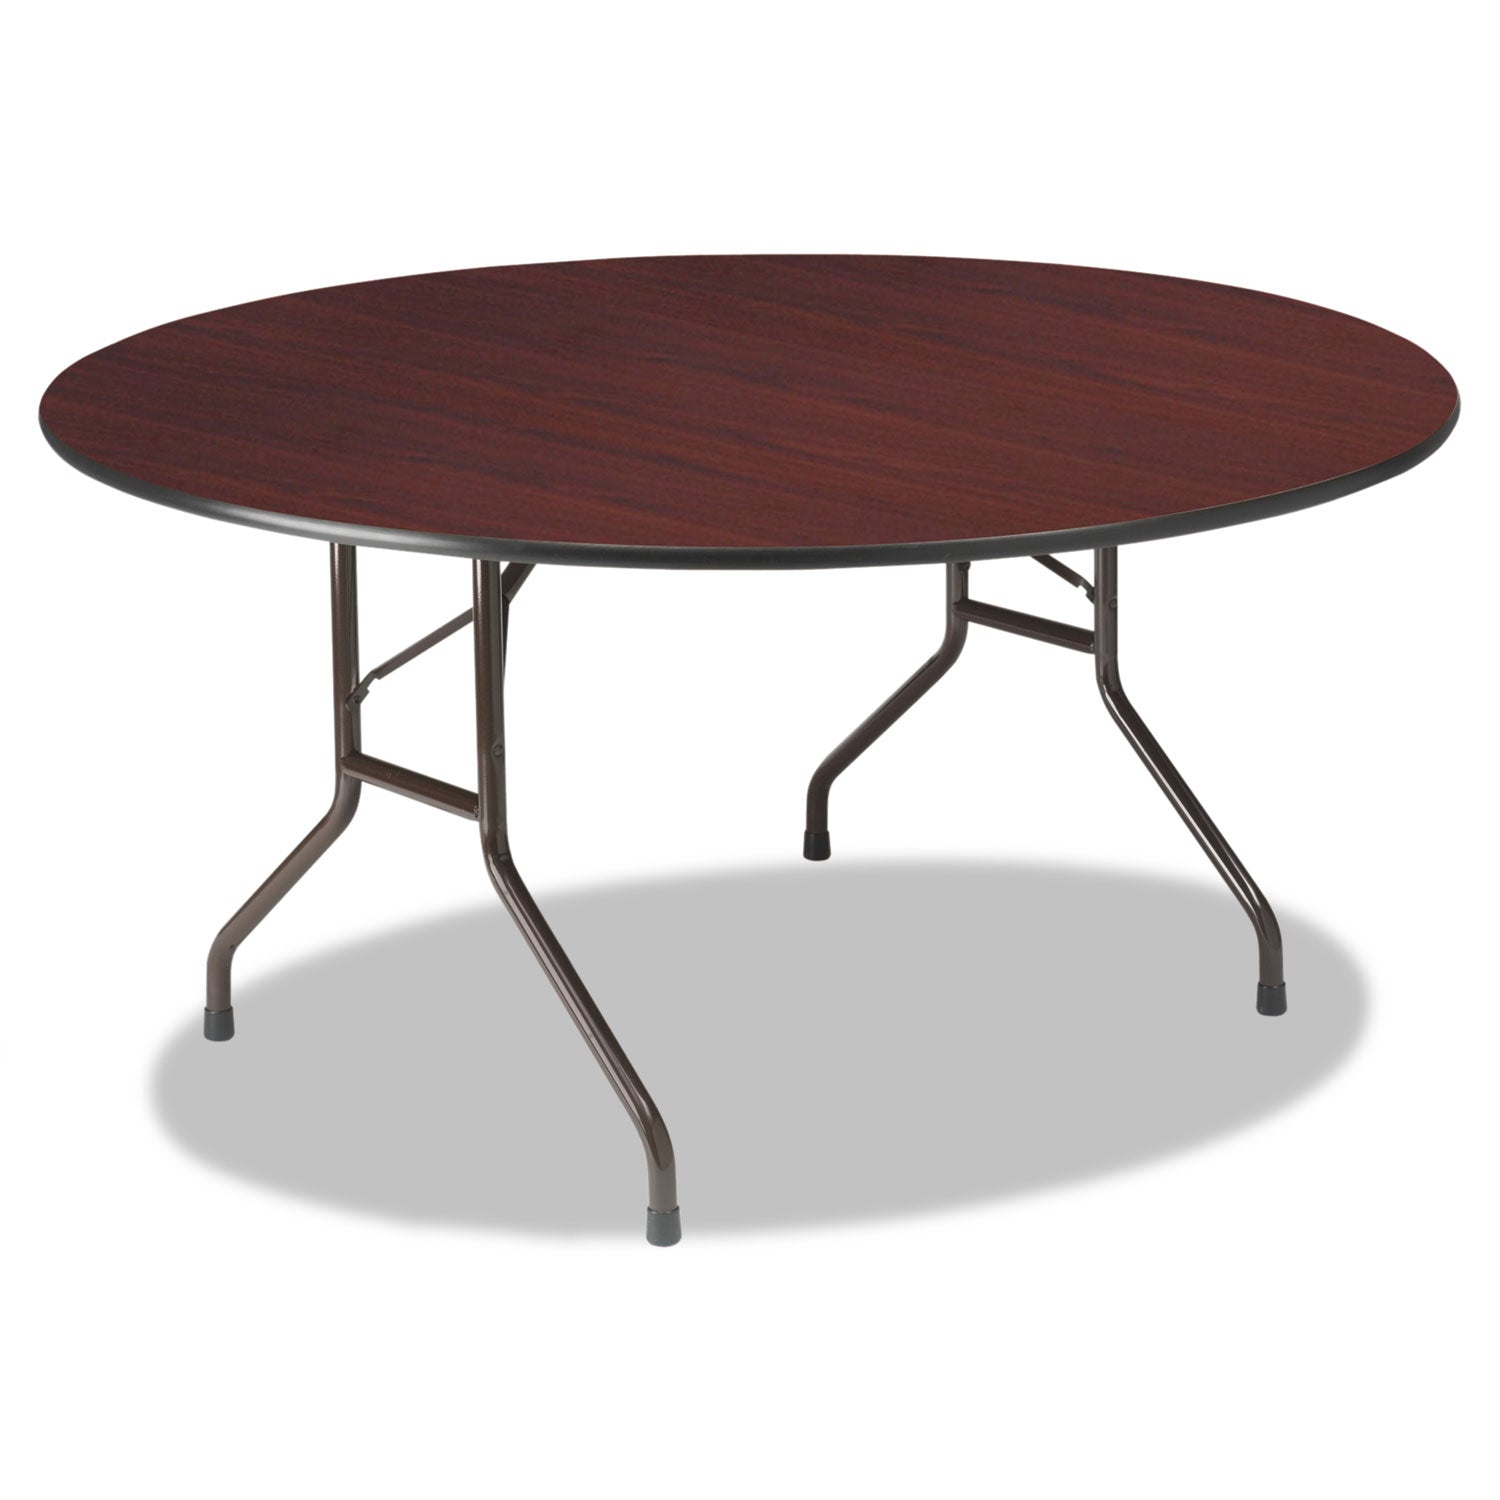 OfficeWorks Wood Folding Table, Round, 60" x 29", Mahogany Top, Gray Base - 